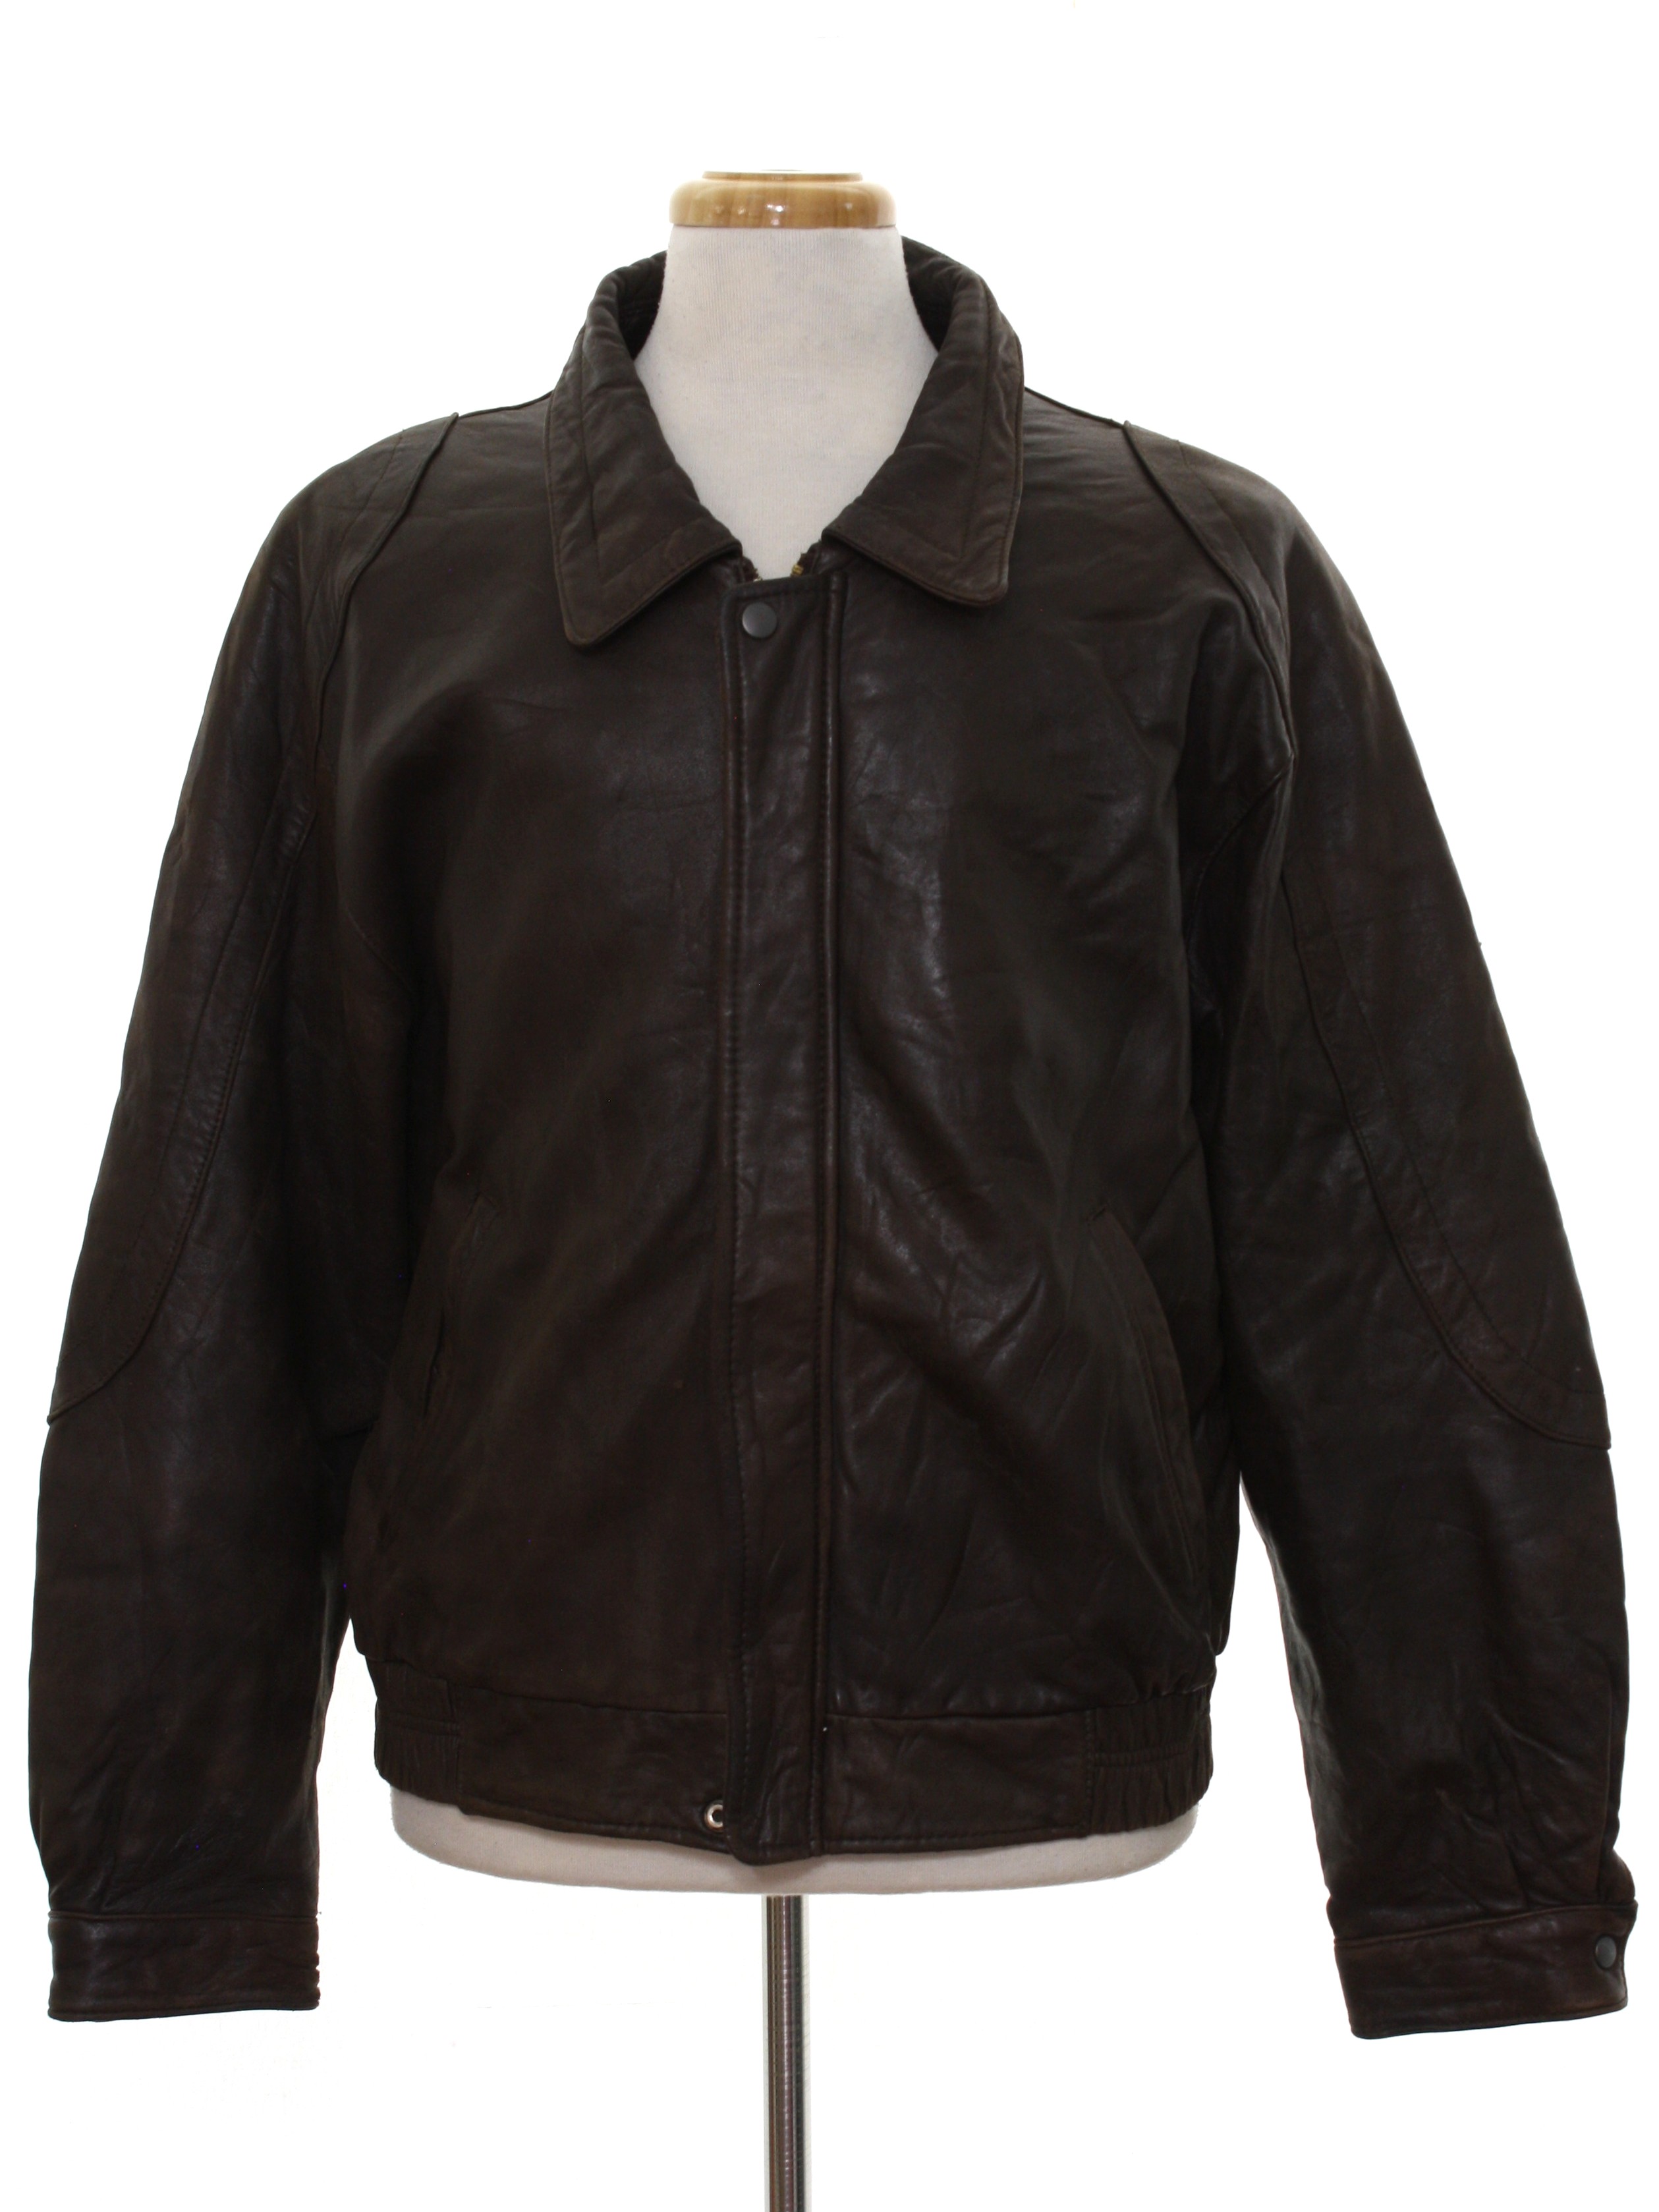 Retro 1980's Leather Jacket (U2 Wear Me Out) : 80s -U2 Wear Me Out ...